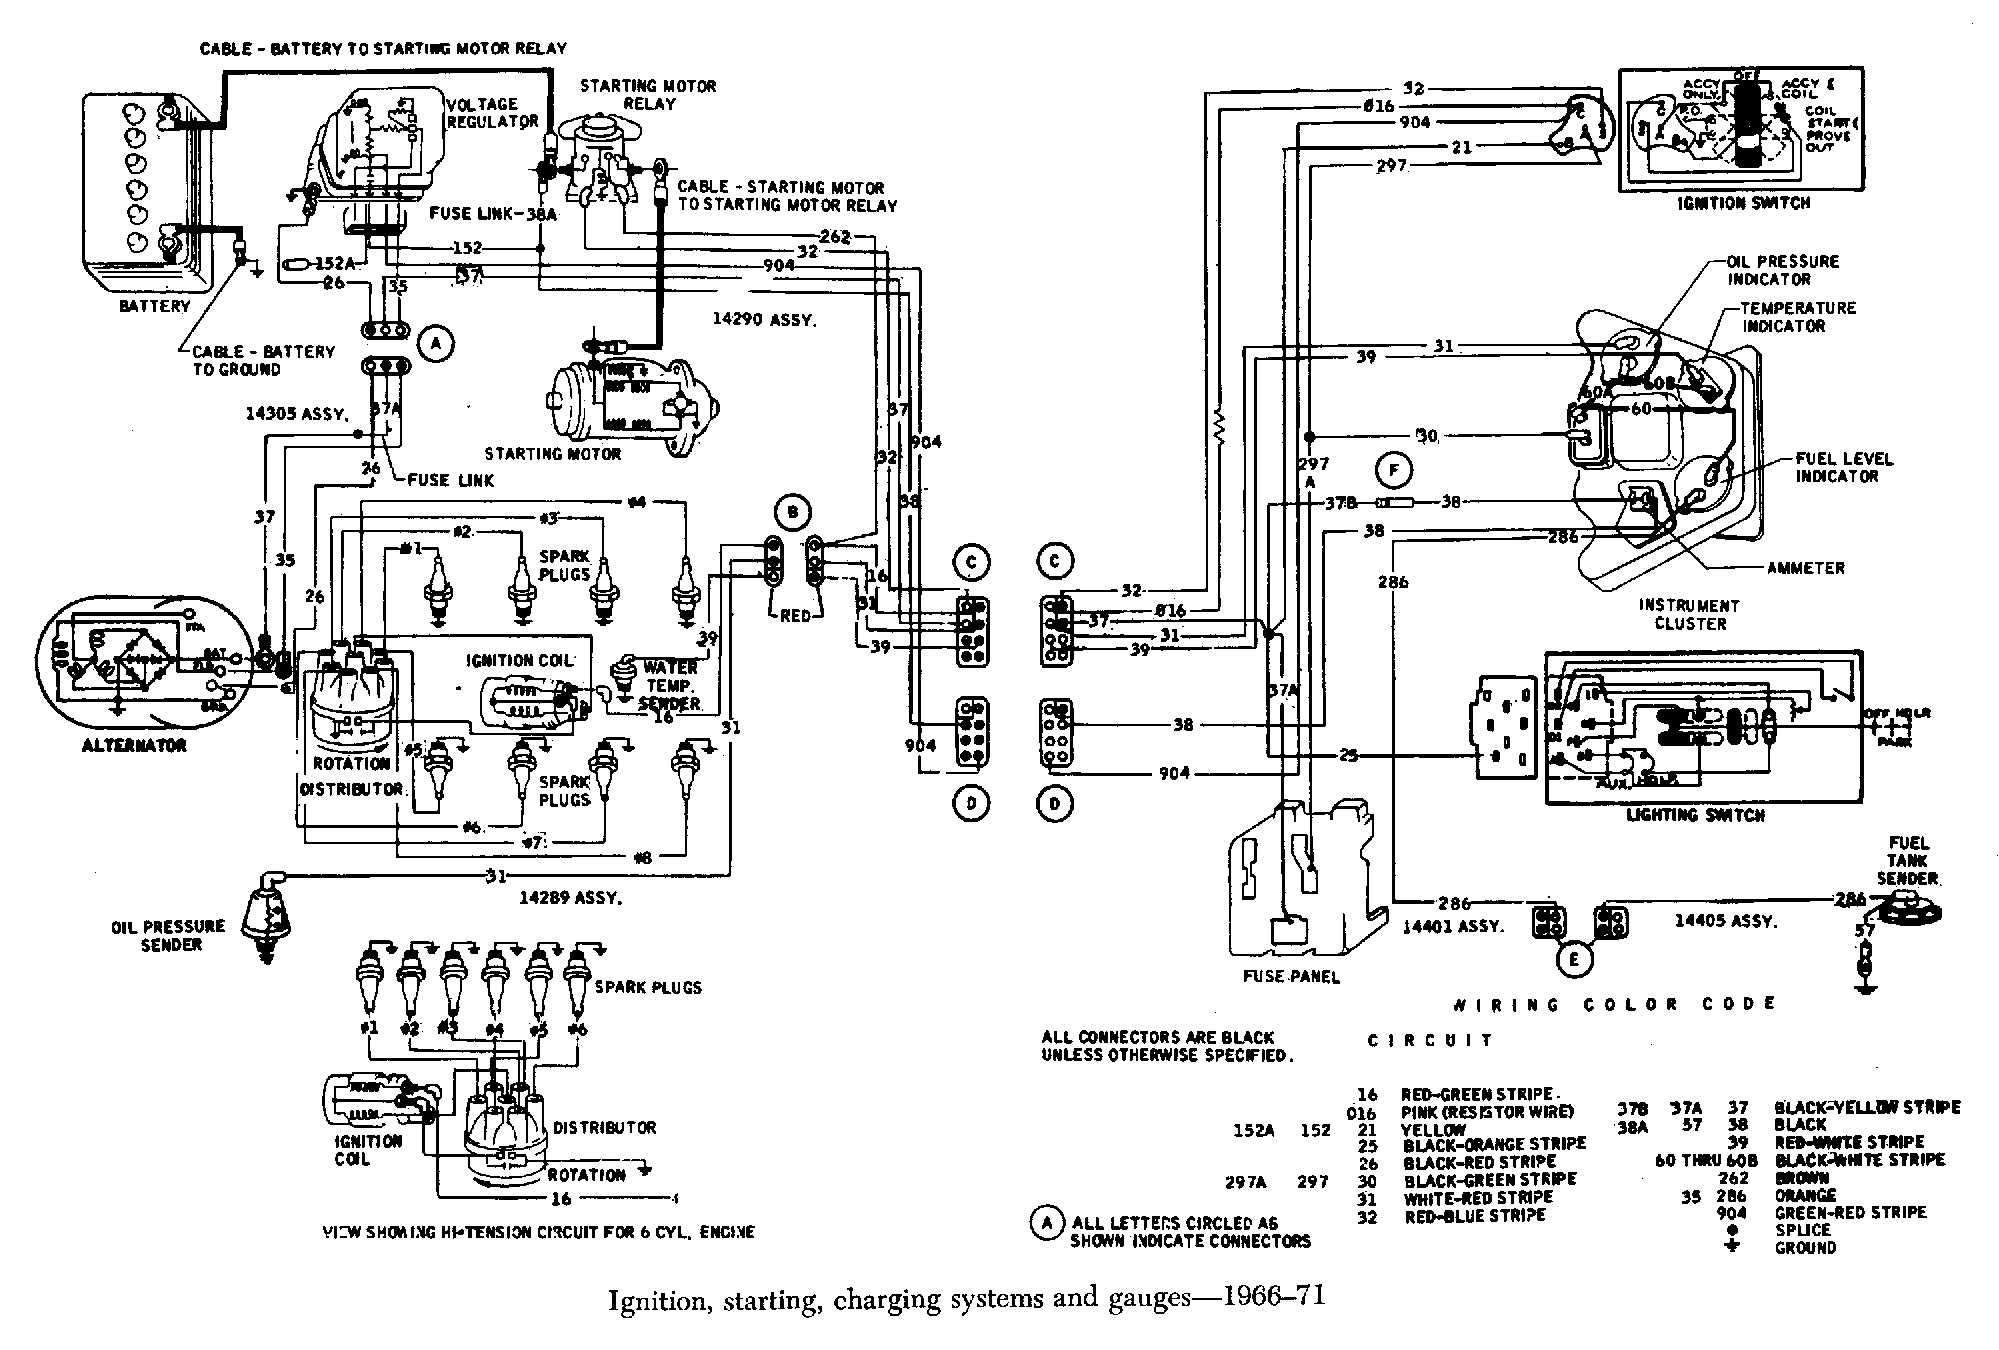 Car Starter Wiring Diagram Car Ignition Wiring Diagram Wiring Diagram Of Car Starter Wiring Diagram